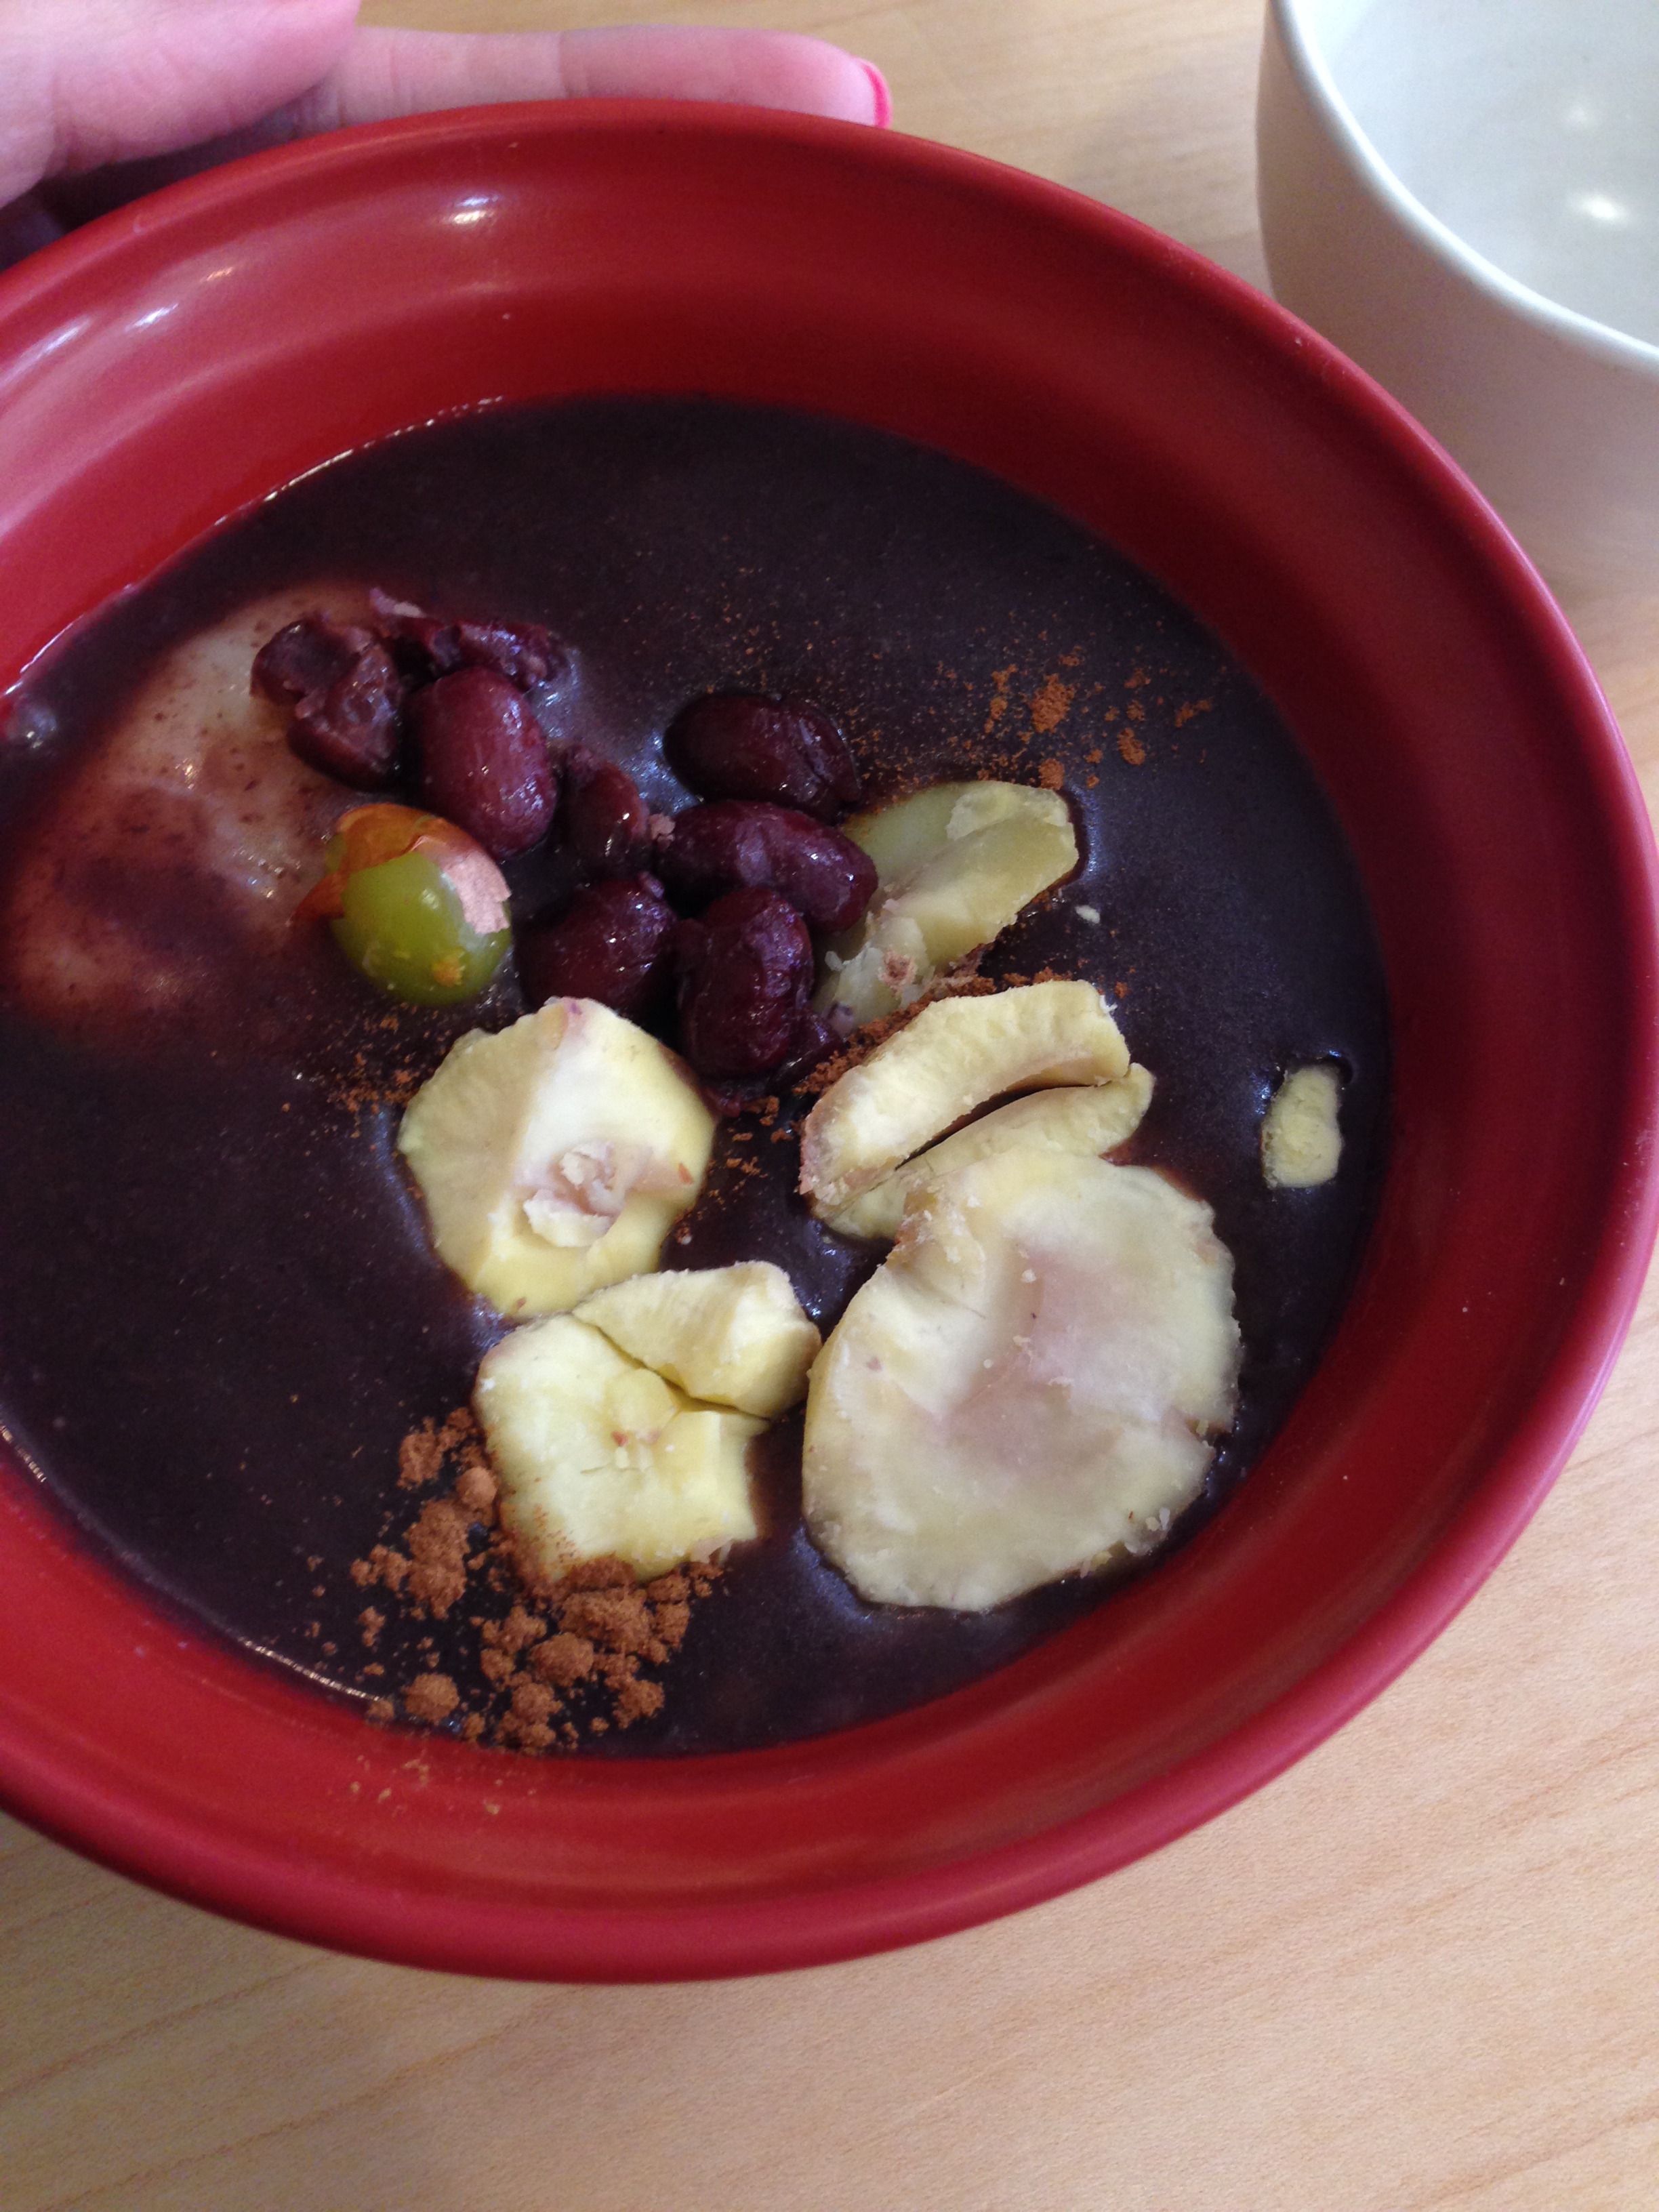 The second best in Seoul: Red bean porridge